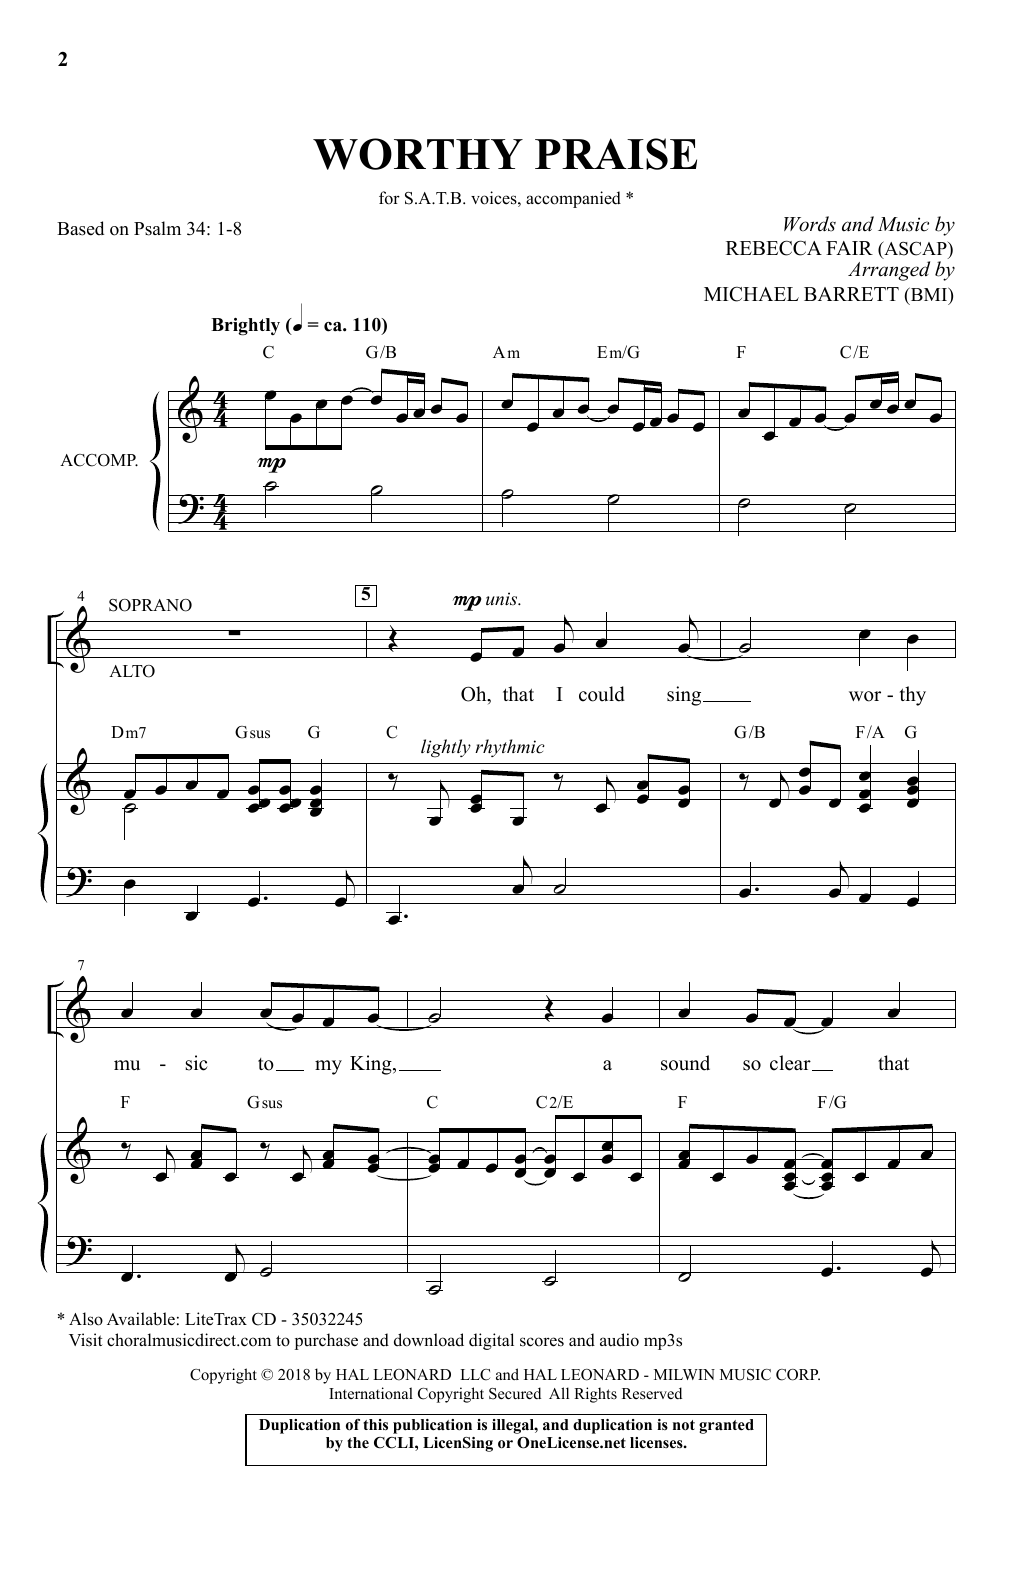 Download Rebecca Fair Worthy Praise (arr. Michael Barrett) Sheet Music and learn how to play SATB Choir PDF digital score in minutes